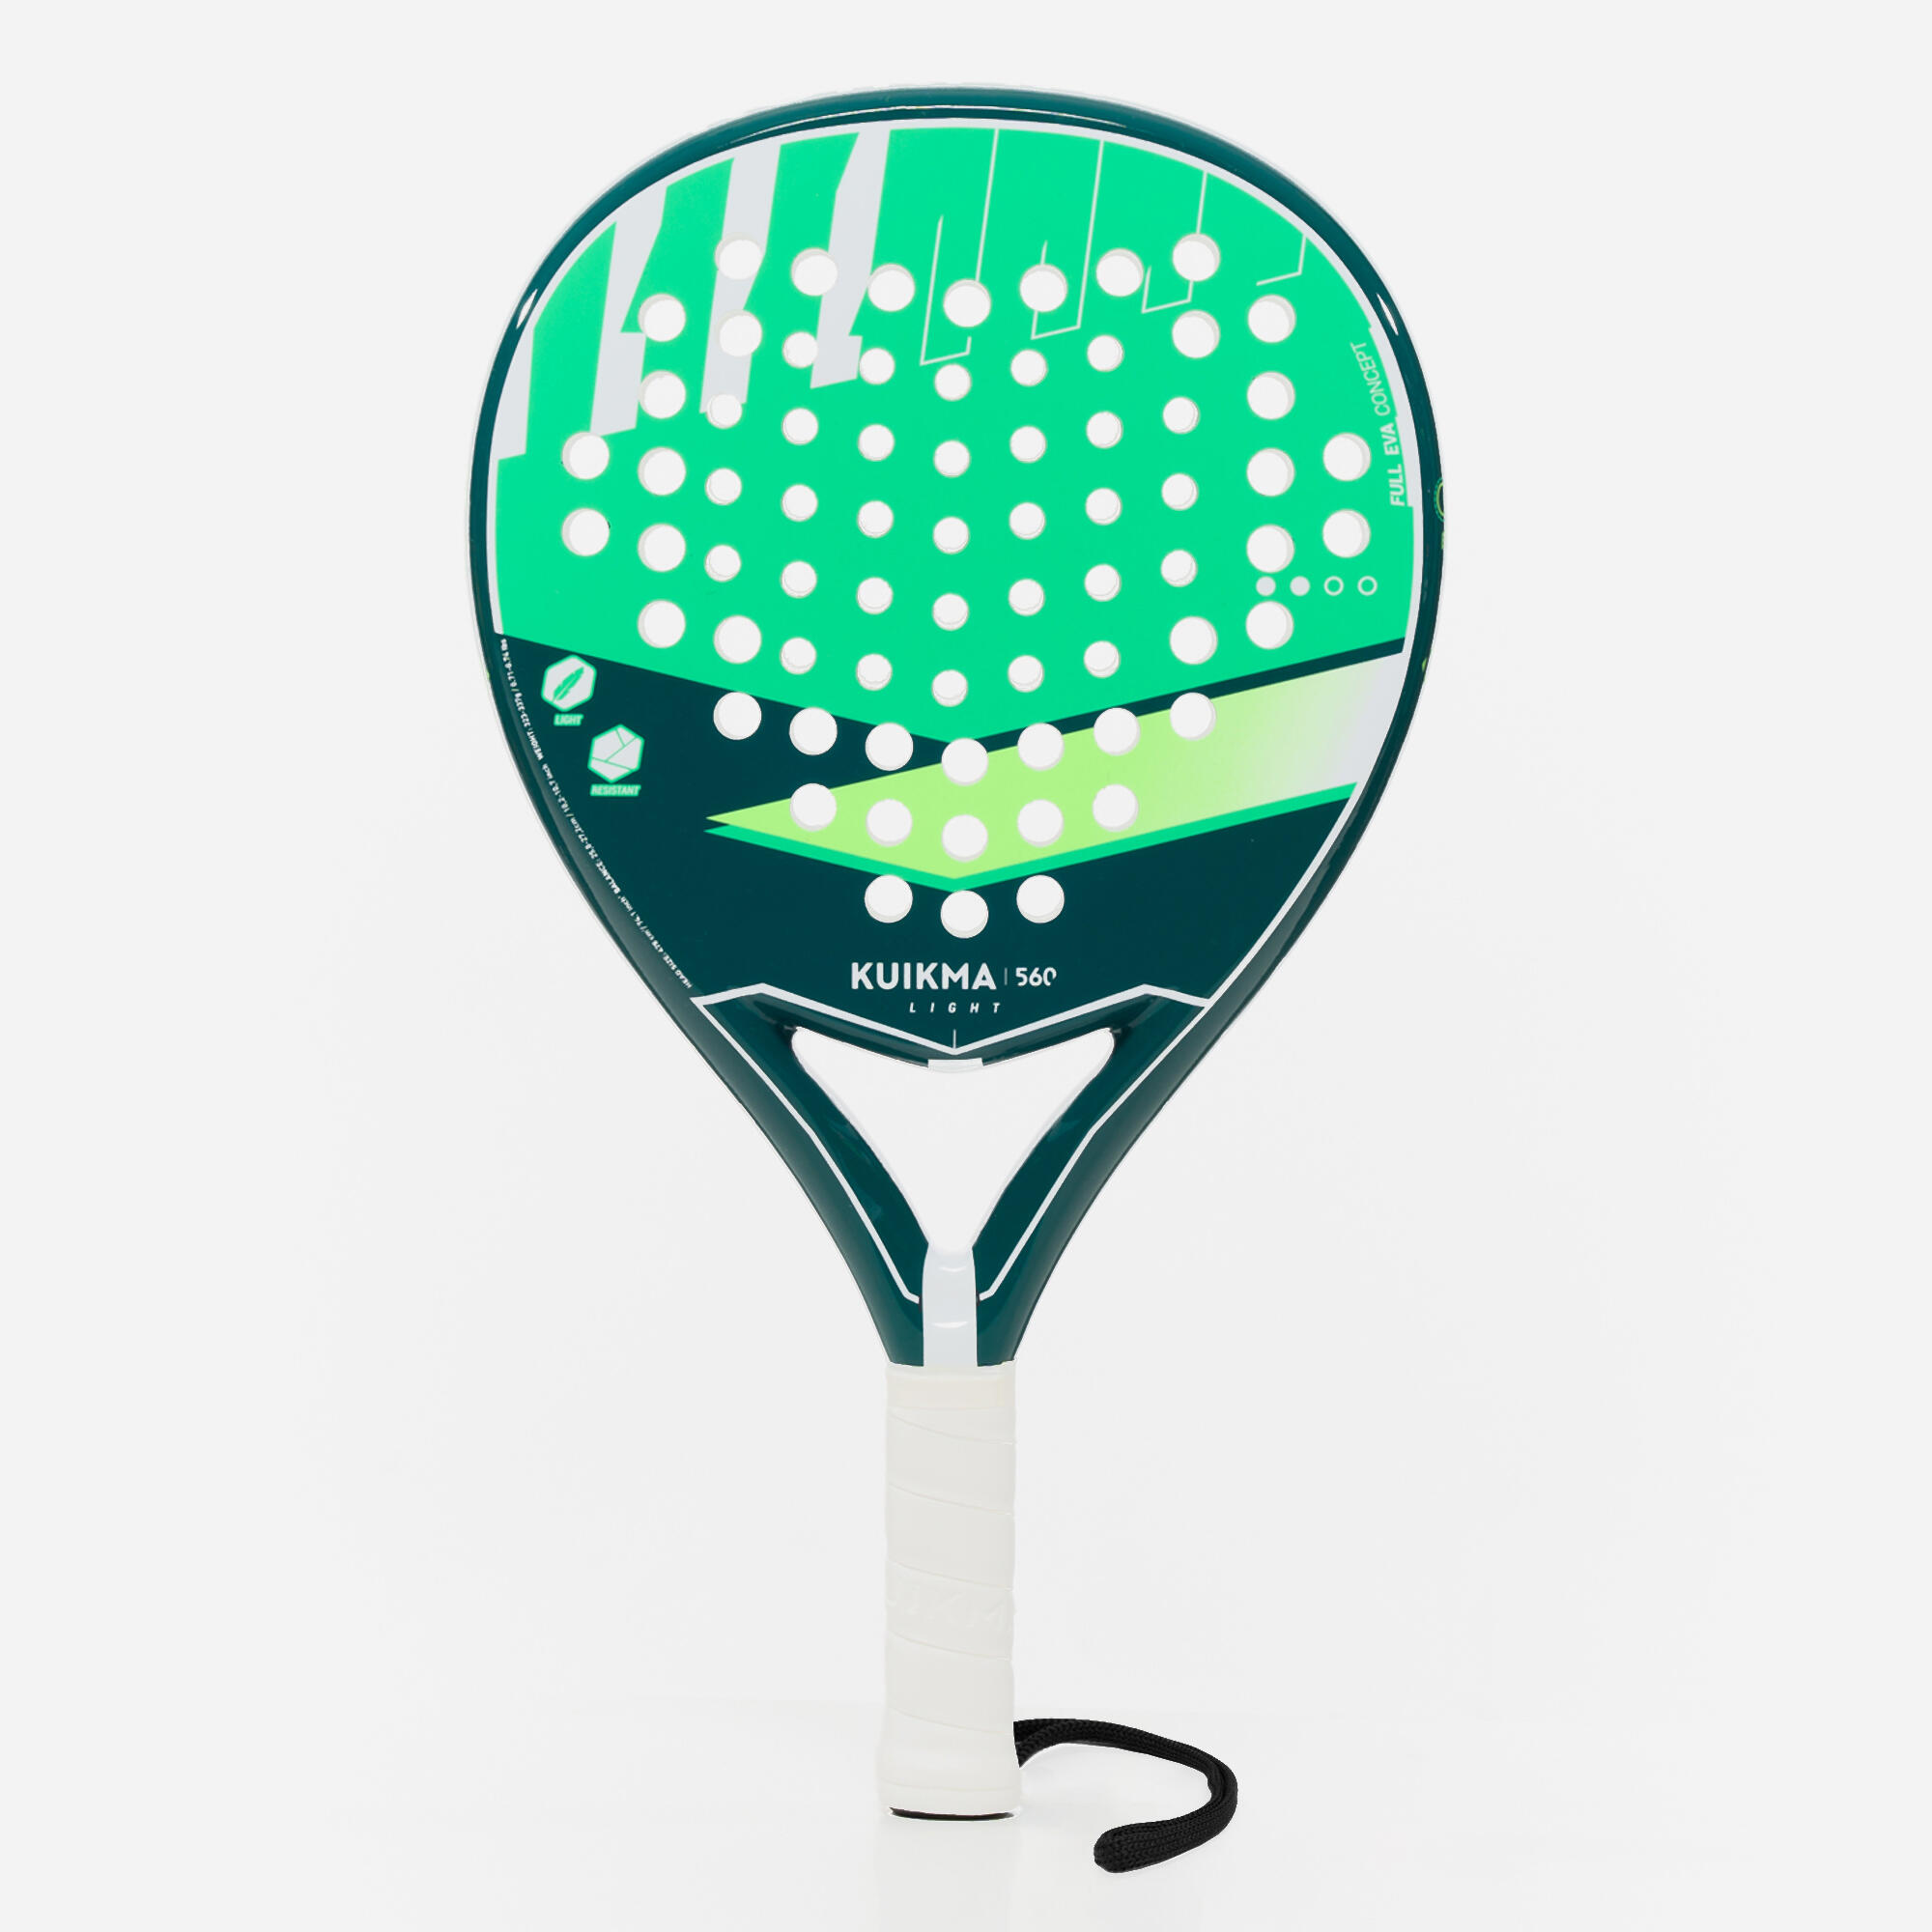 Racket pr 560 light groen